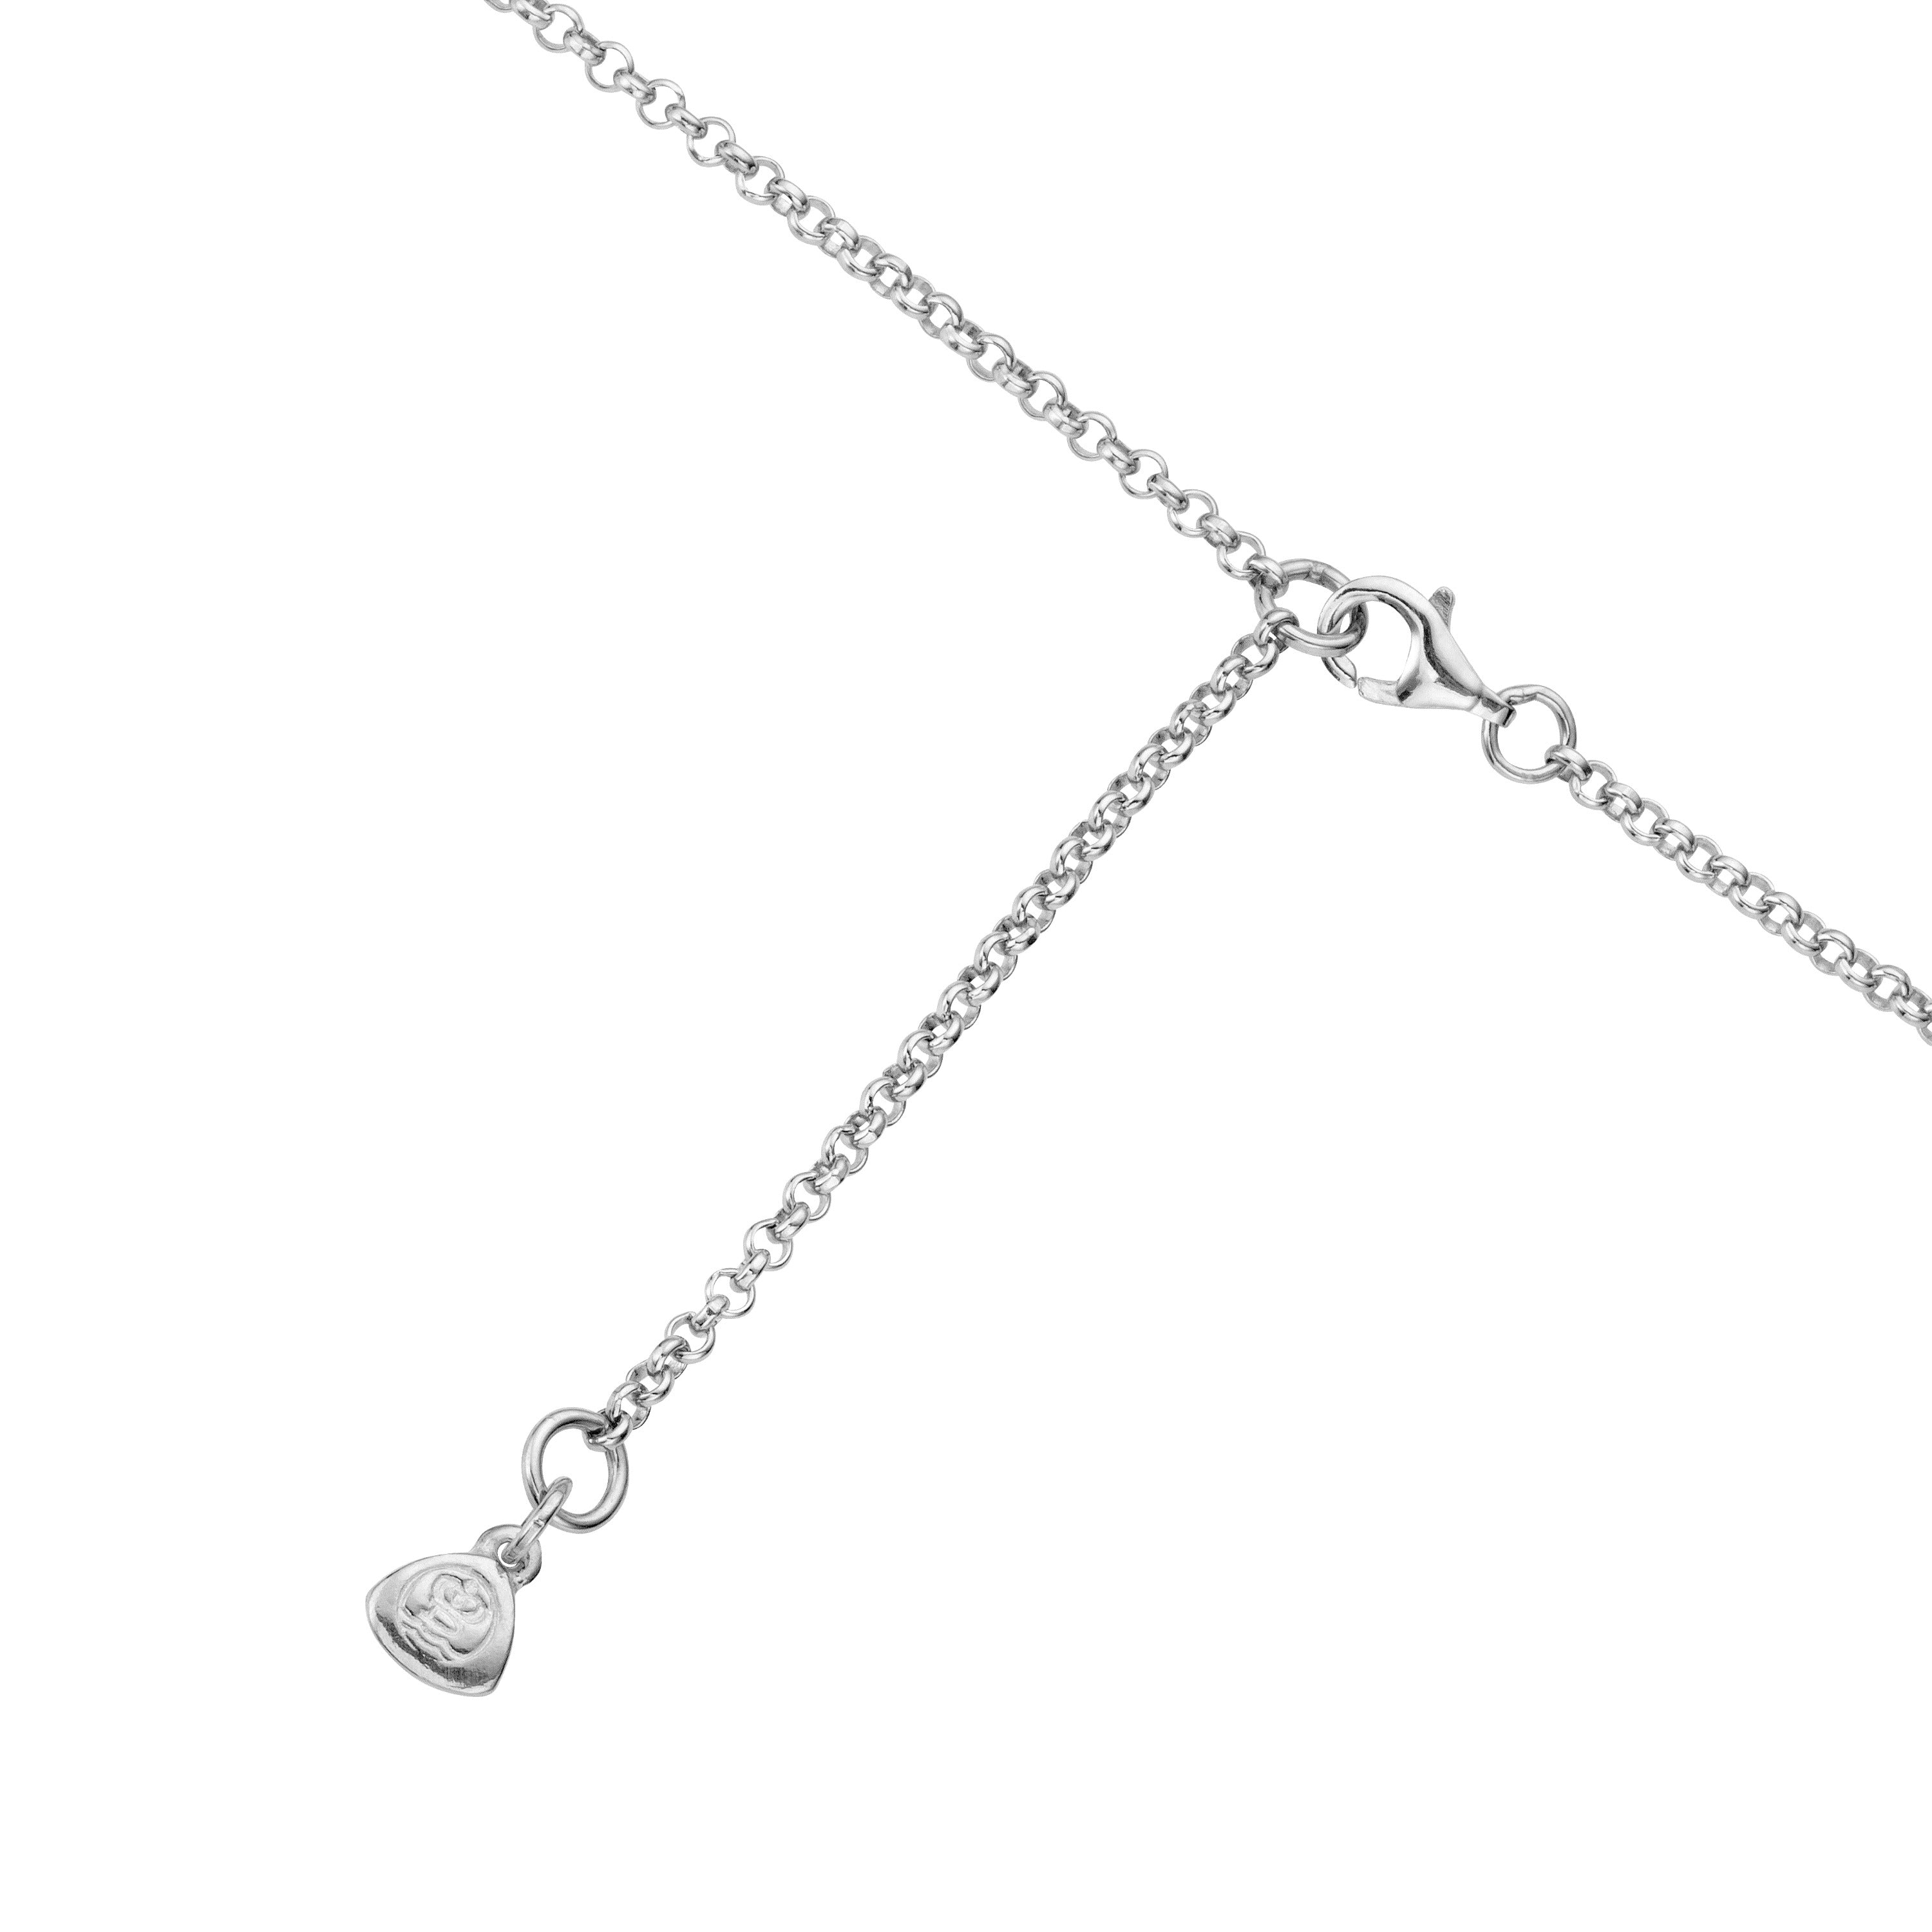 Silver Amethyst Moon & Stone Necklace